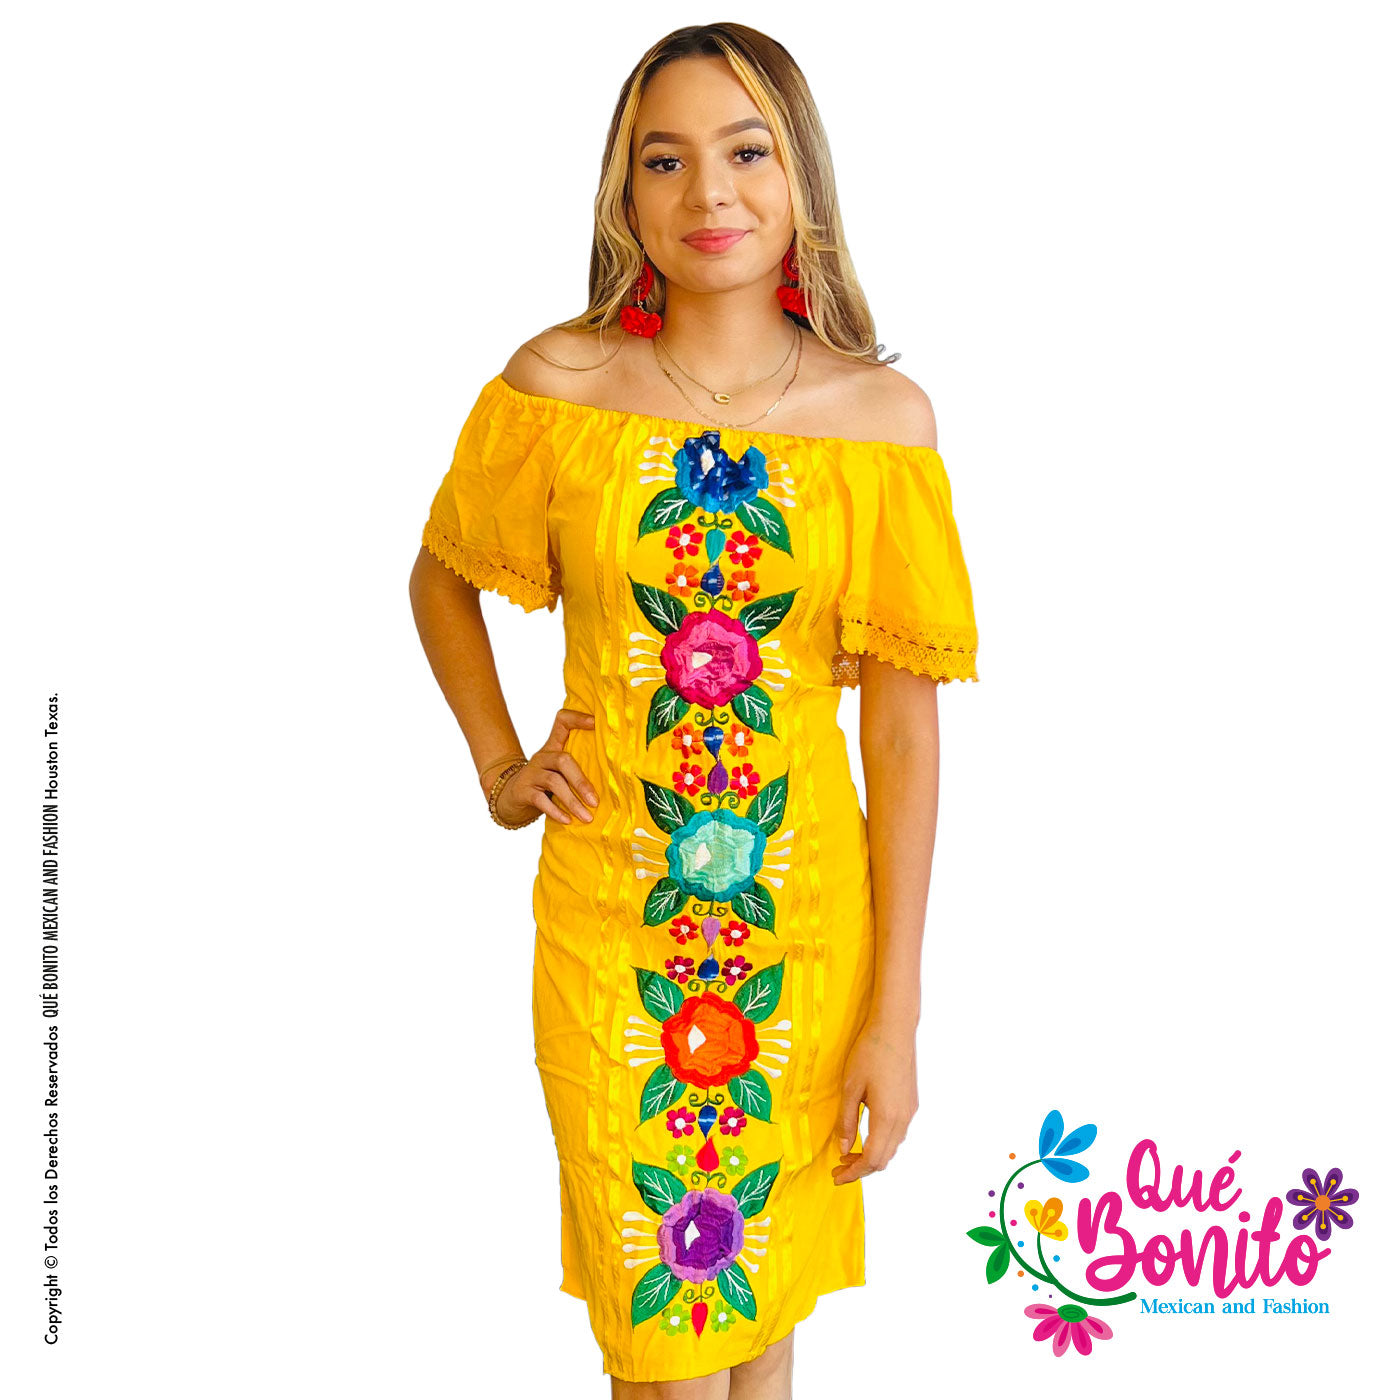 Cruz Yellow Dress Que Bonito Mexican and Fashion